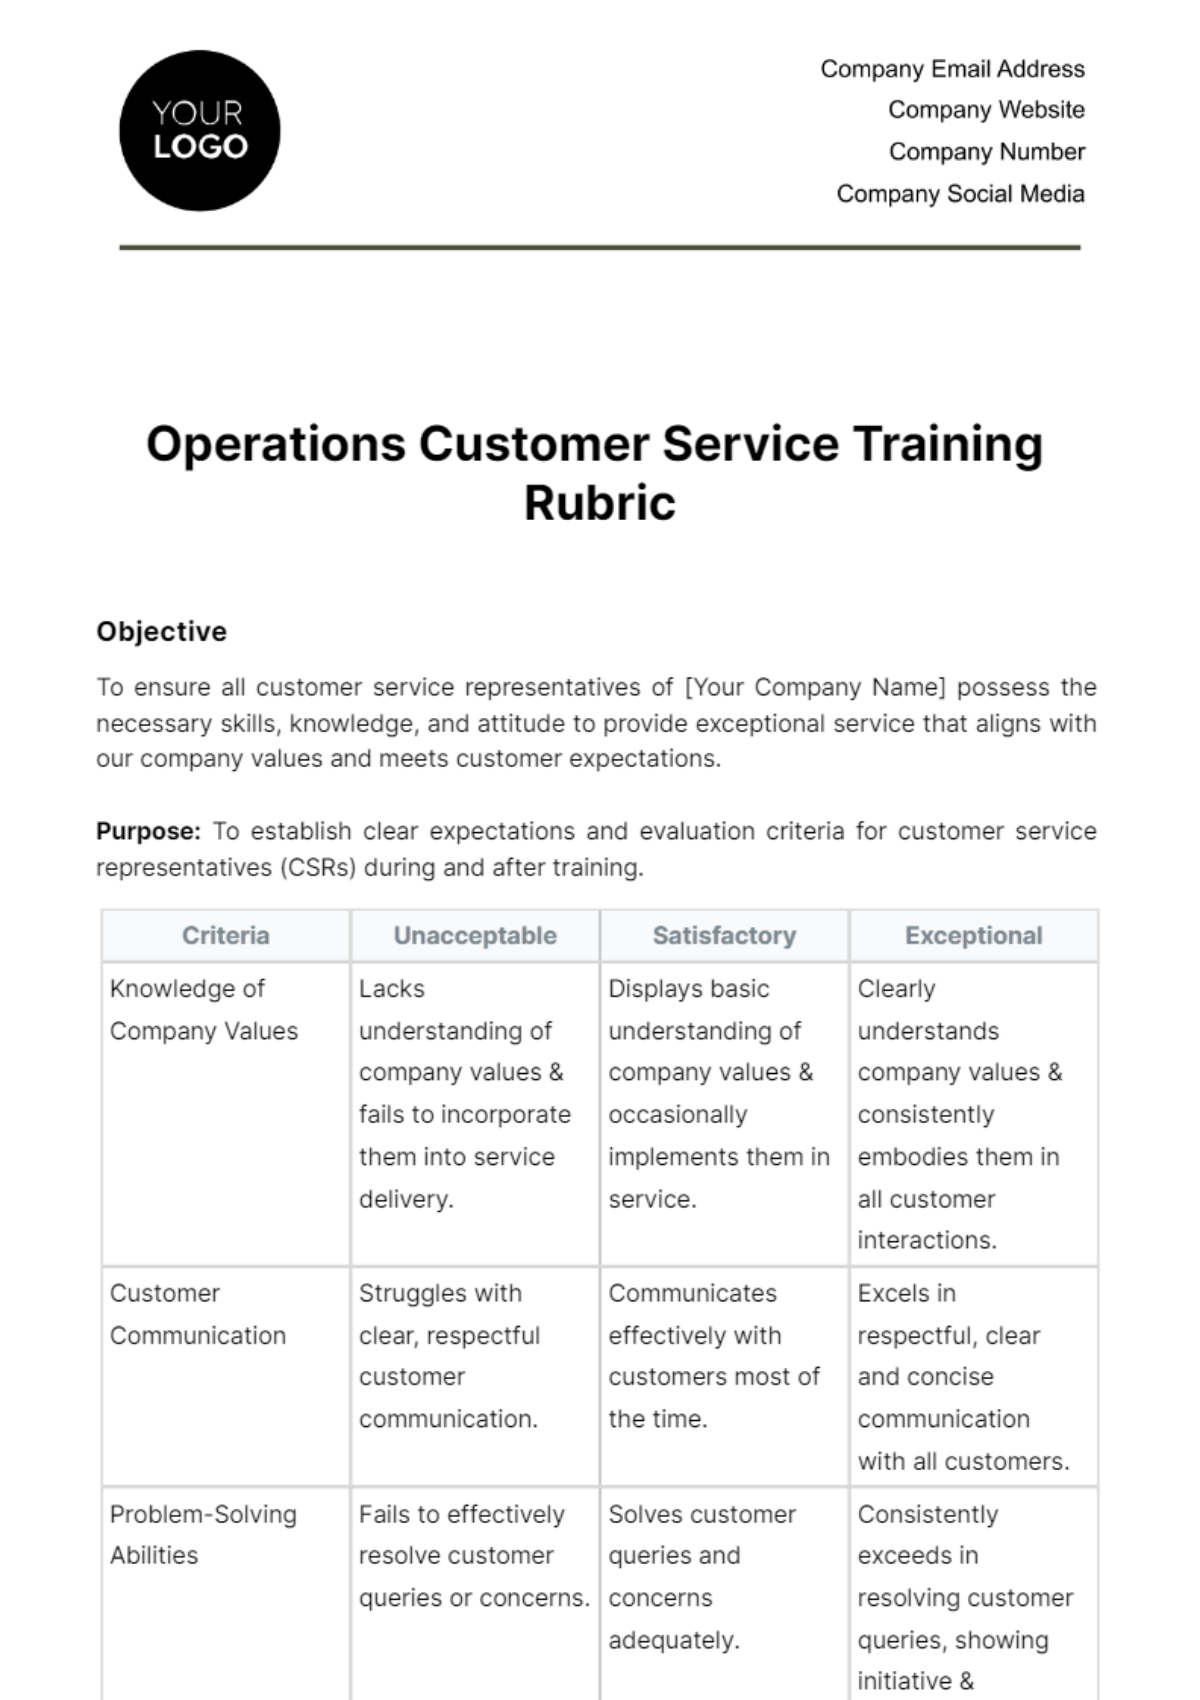 Operations Customer Service Training Rubric Template